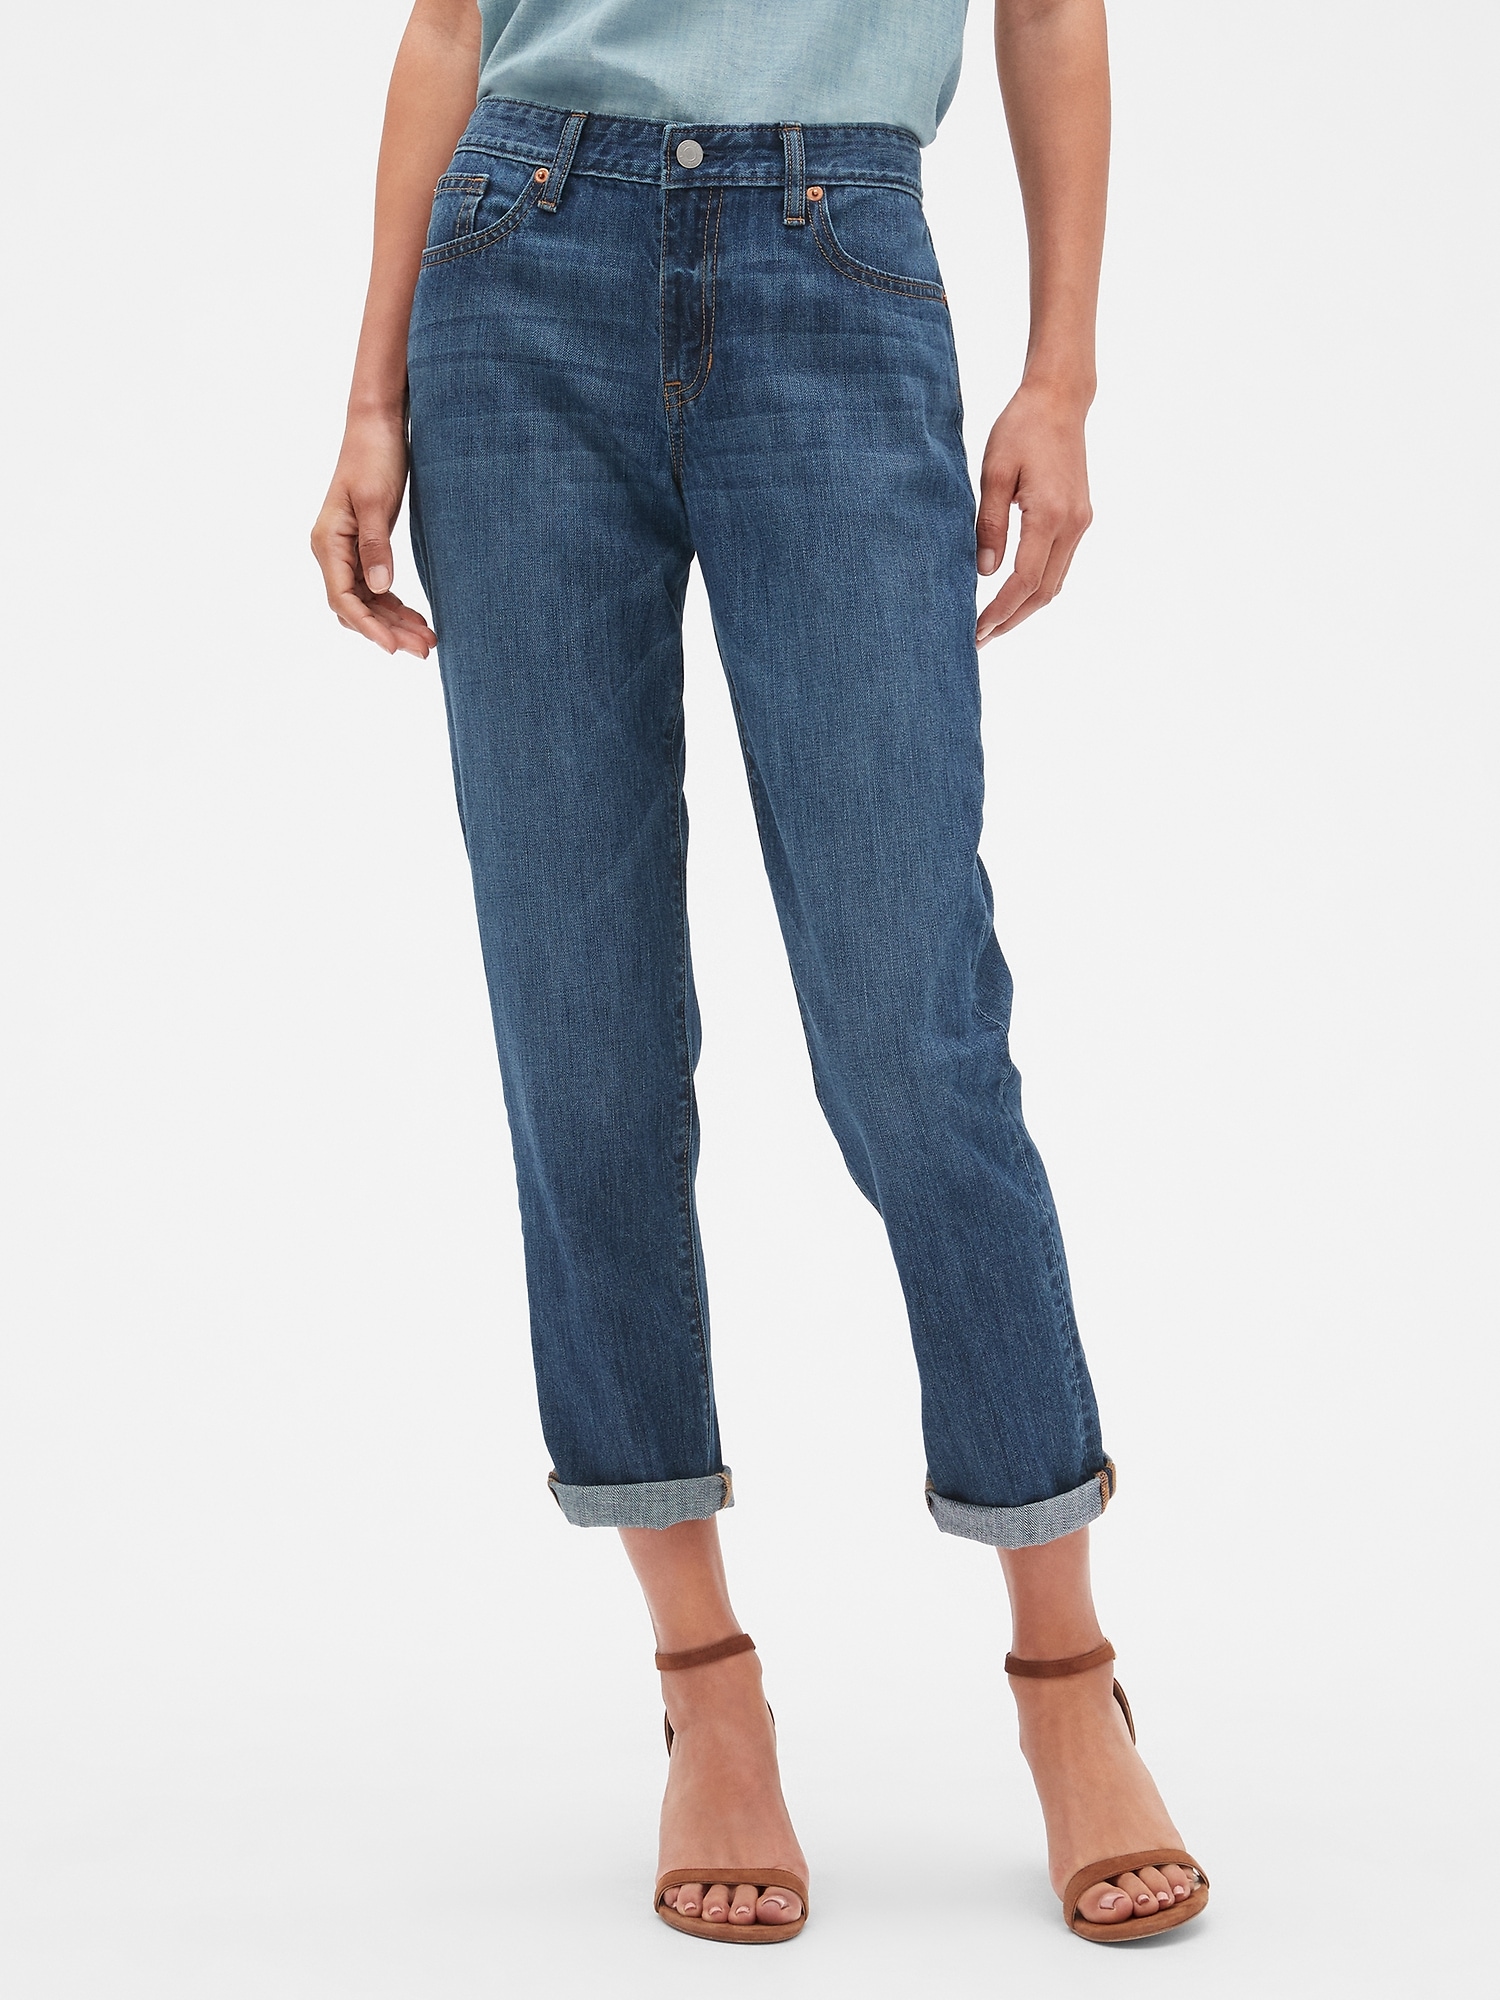 jeans gap